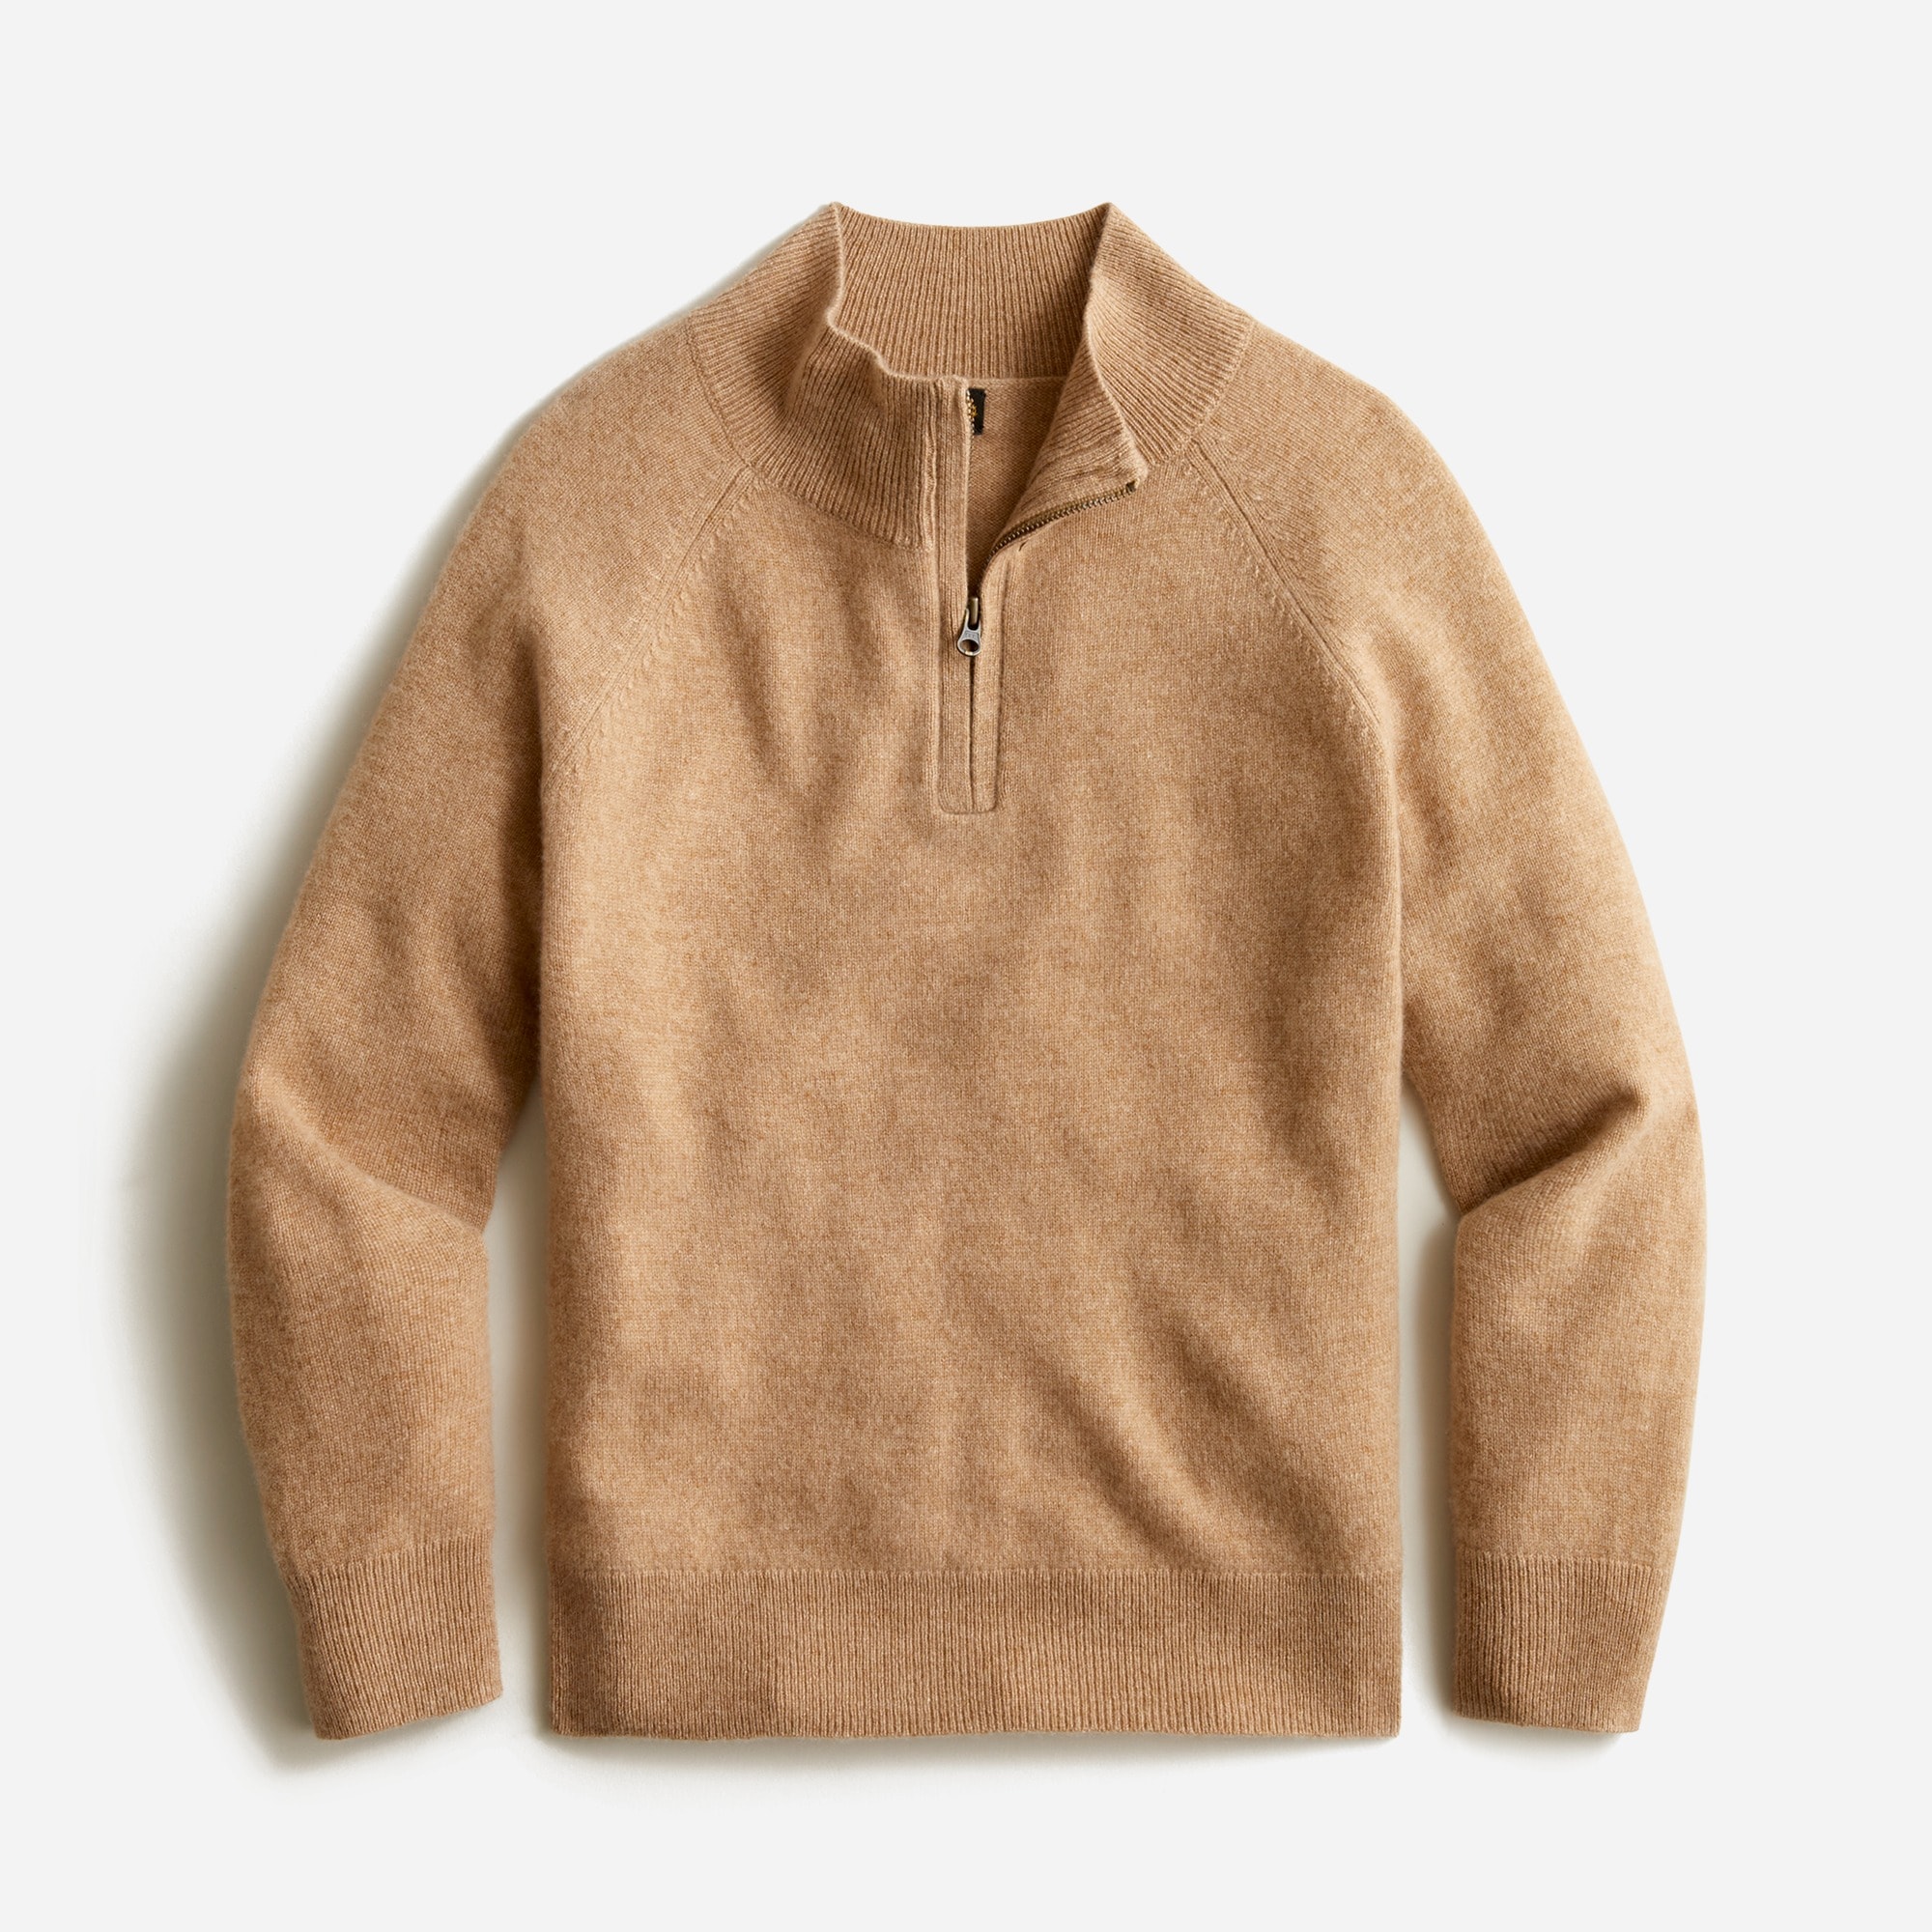 Jcrew Kids cashmere half-zip sweater